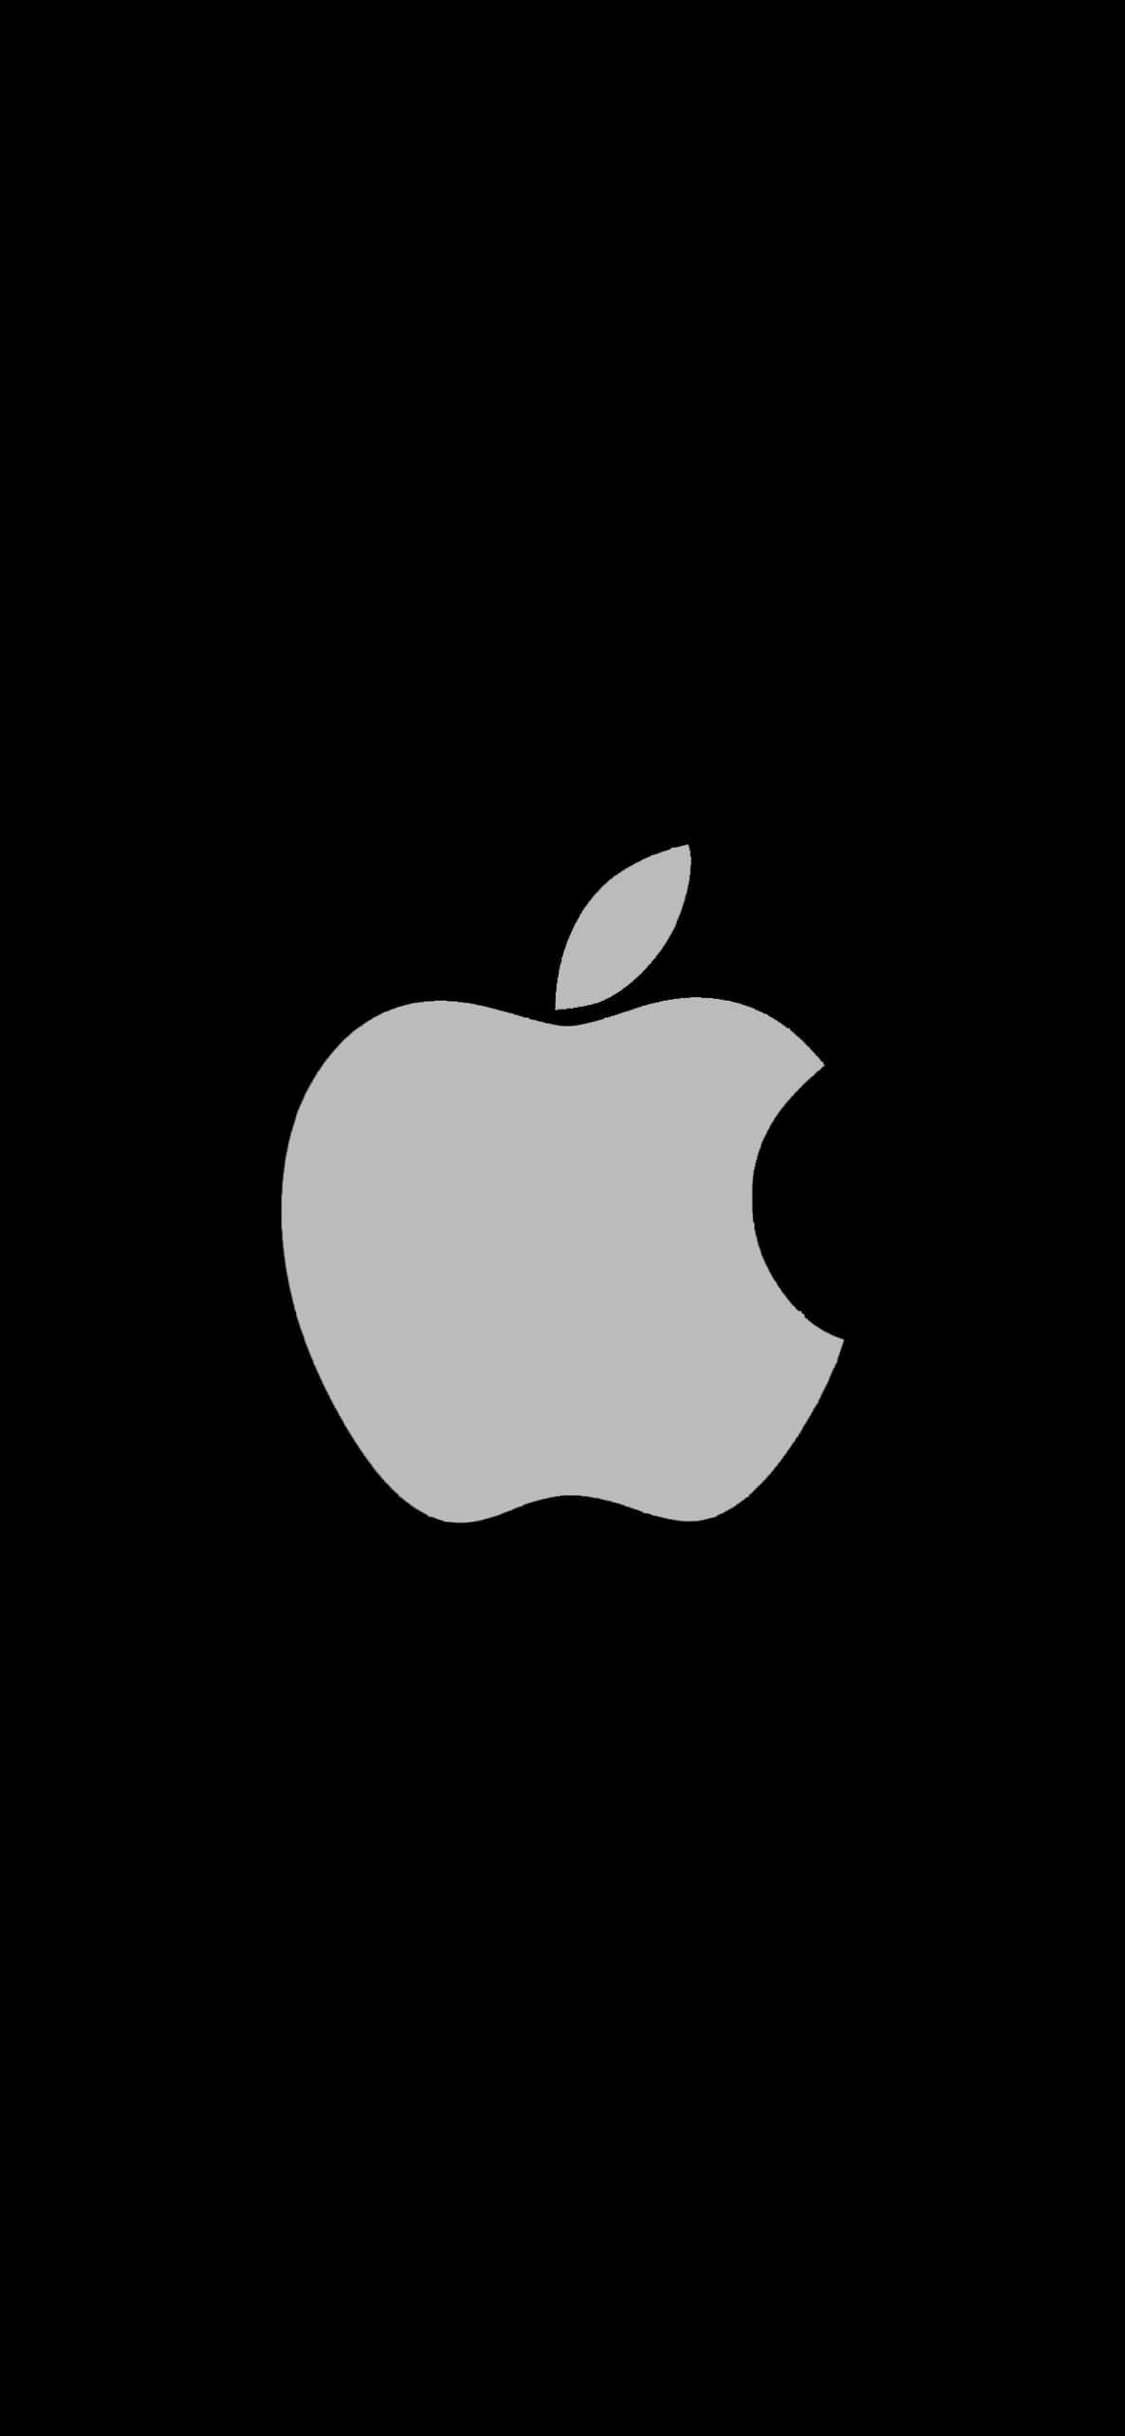 Apple logo black cool | wallpaper.sc iPhoneXS